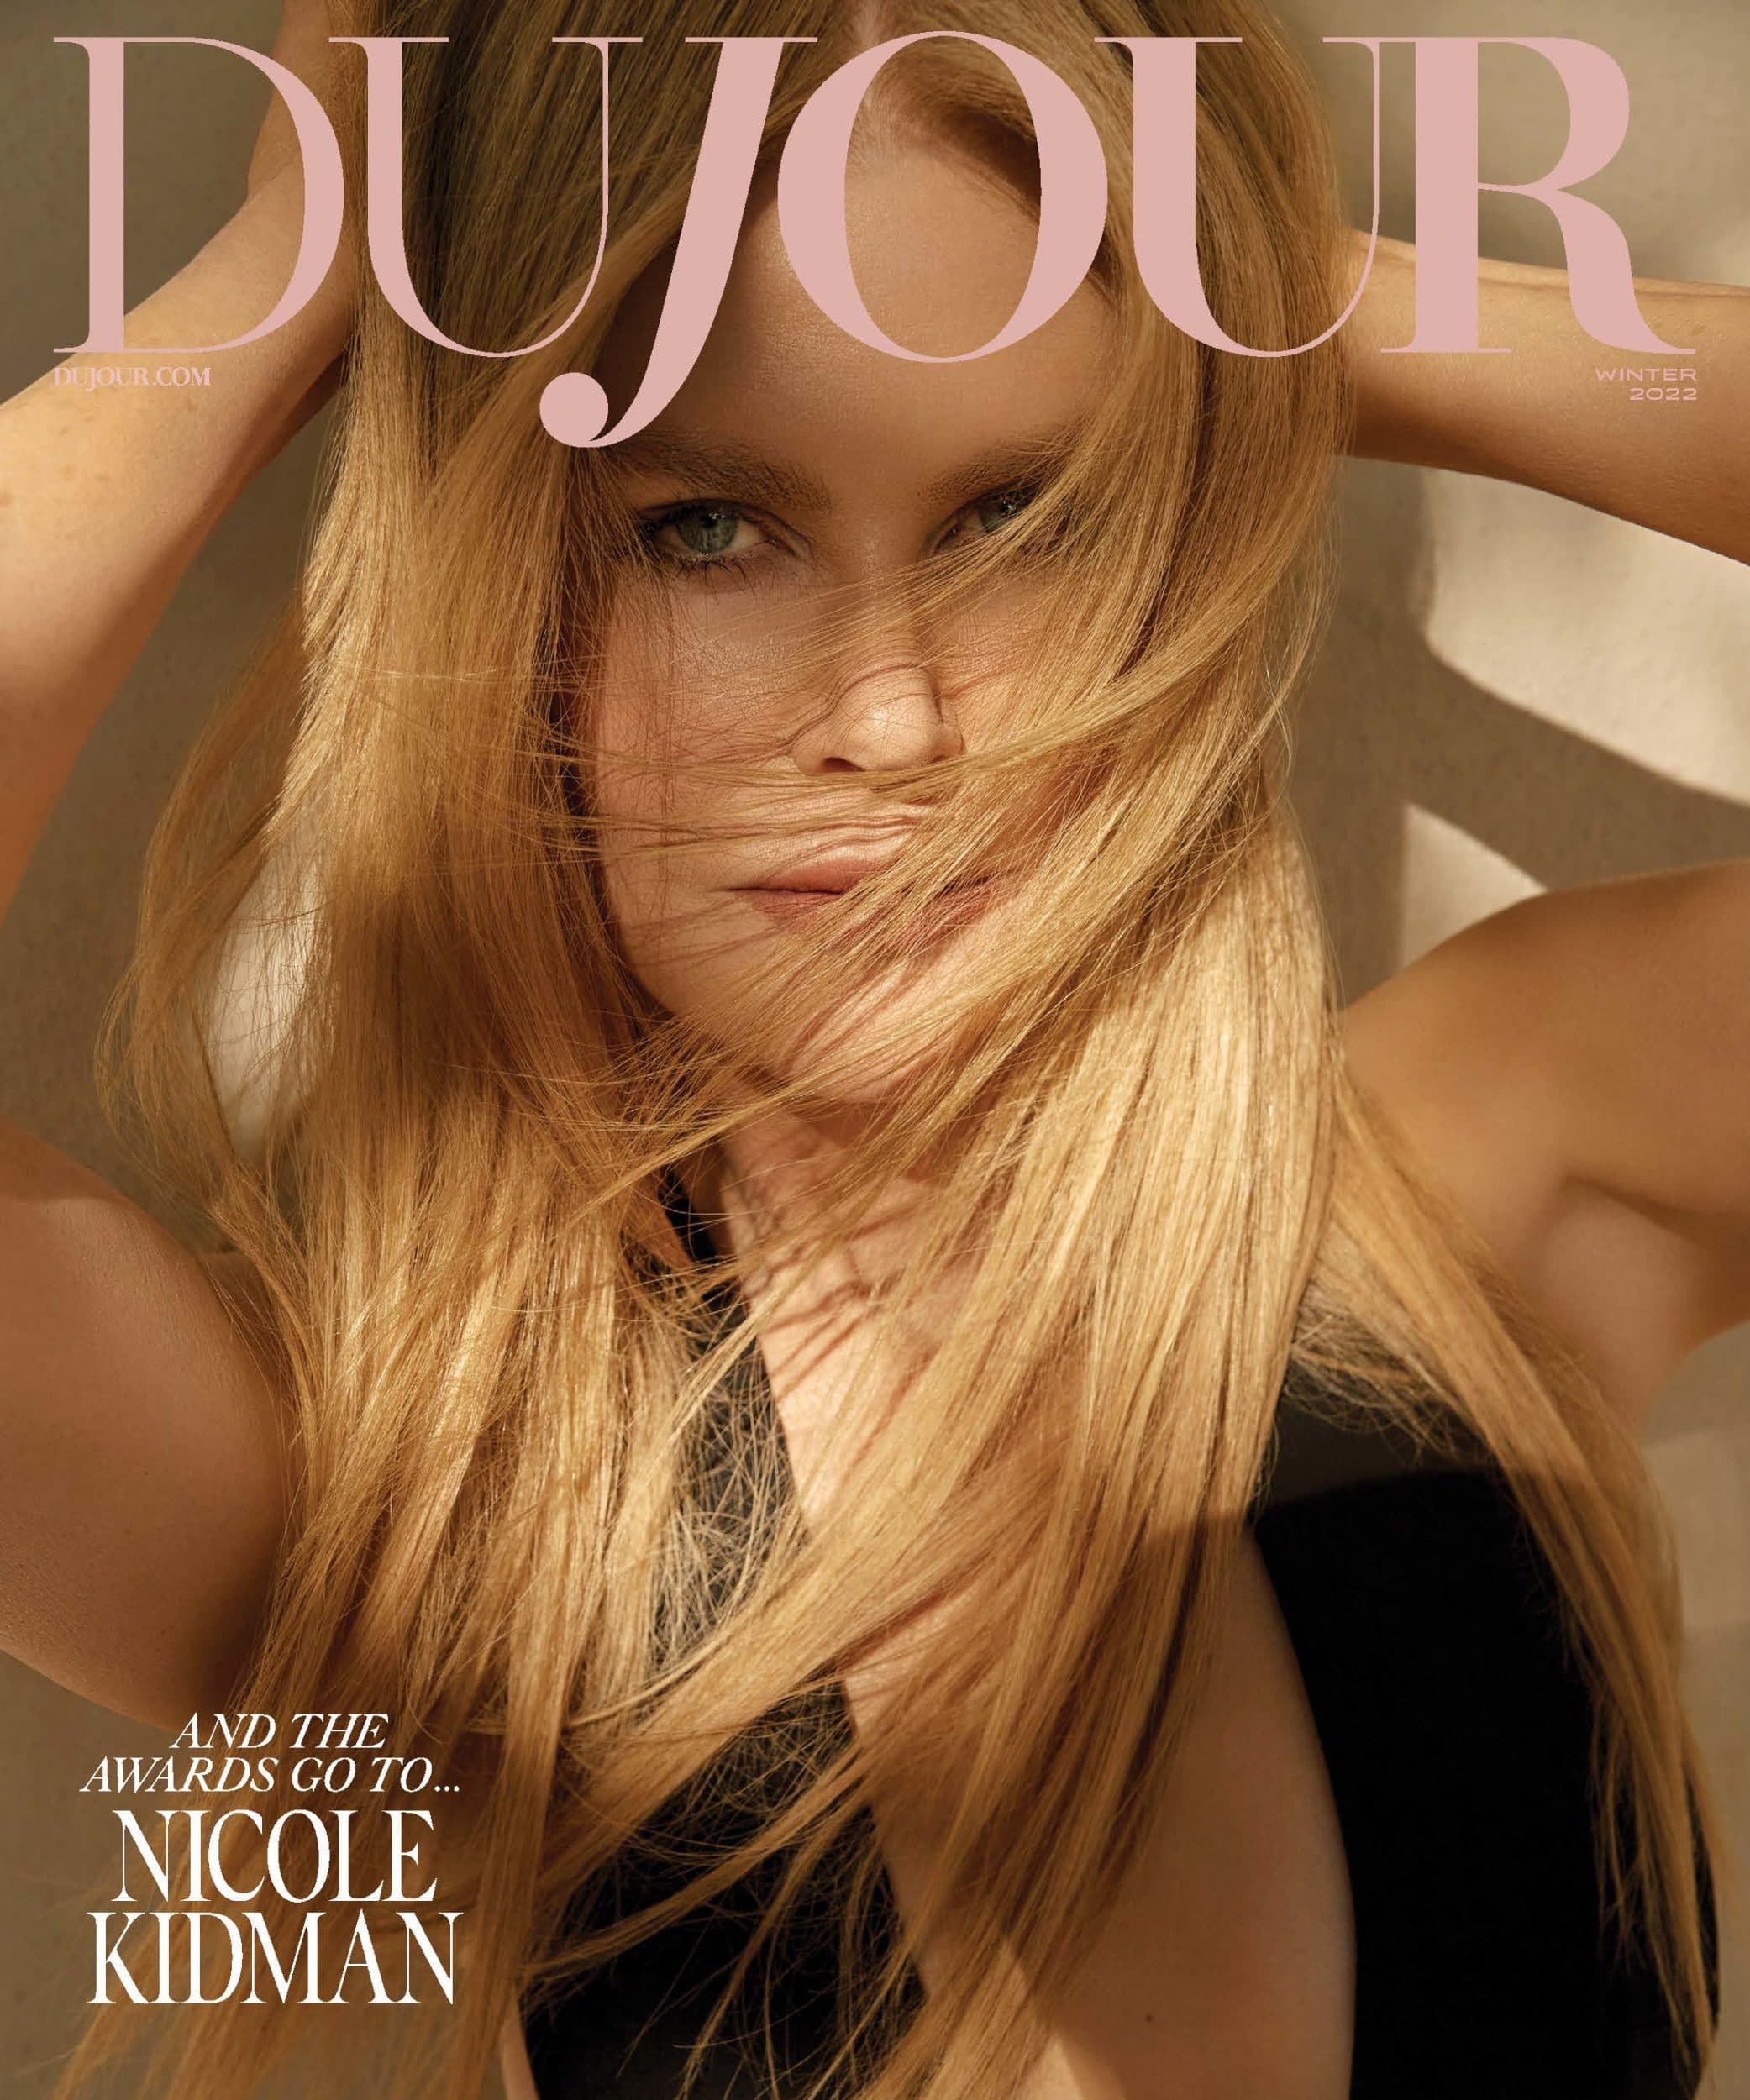 DuJour Winter2022 NicoleKidman Cover 1 scaled 1